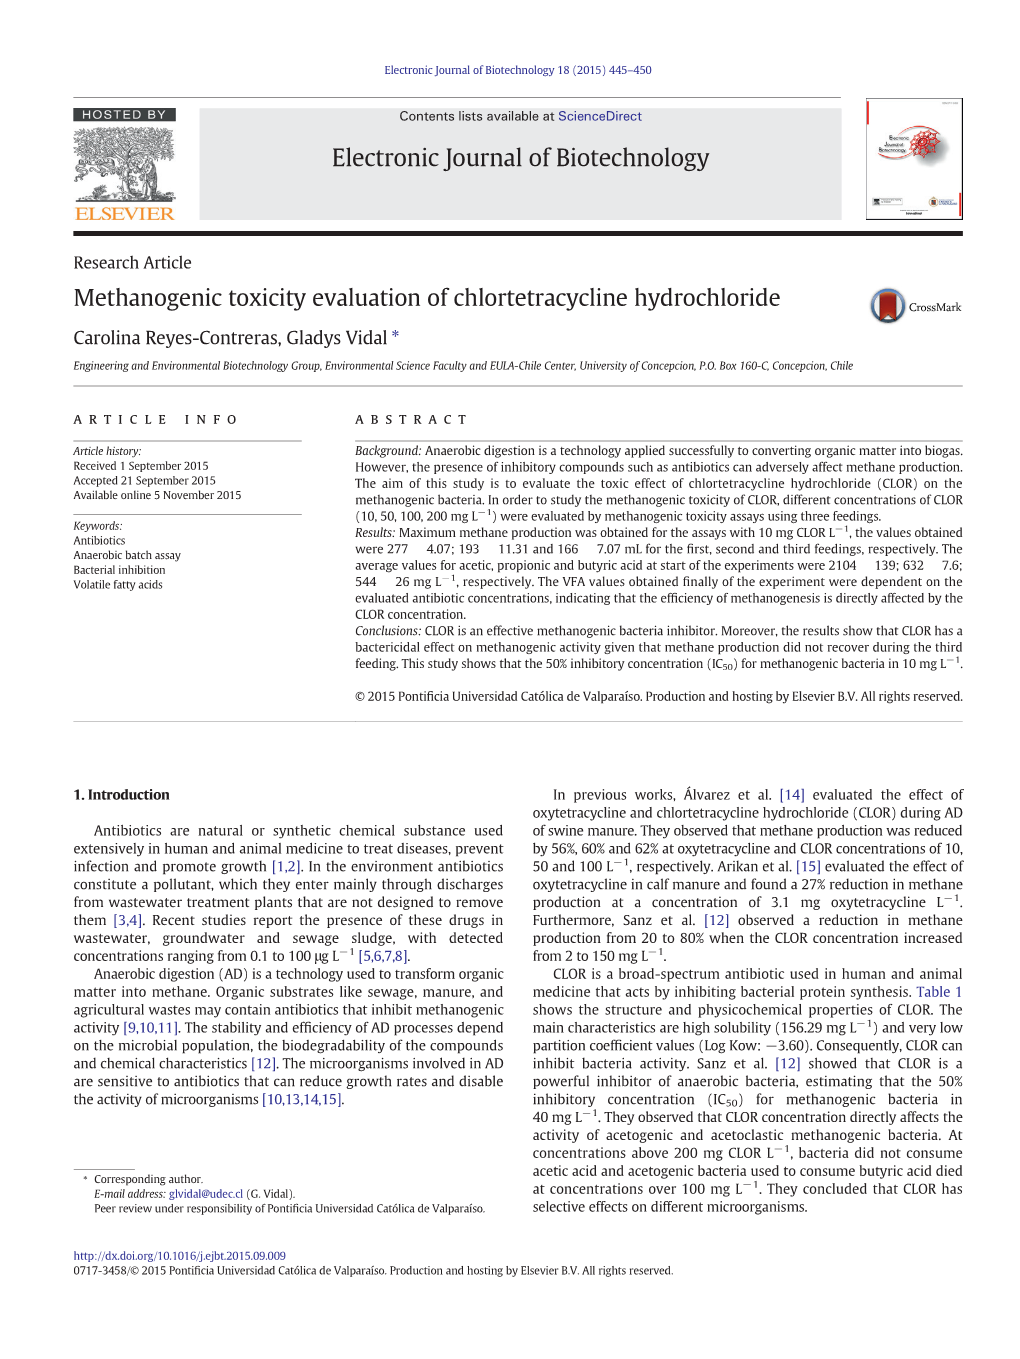 Methanogenic Toxicity Evaluation of Chlortetracycline Hydrochloride